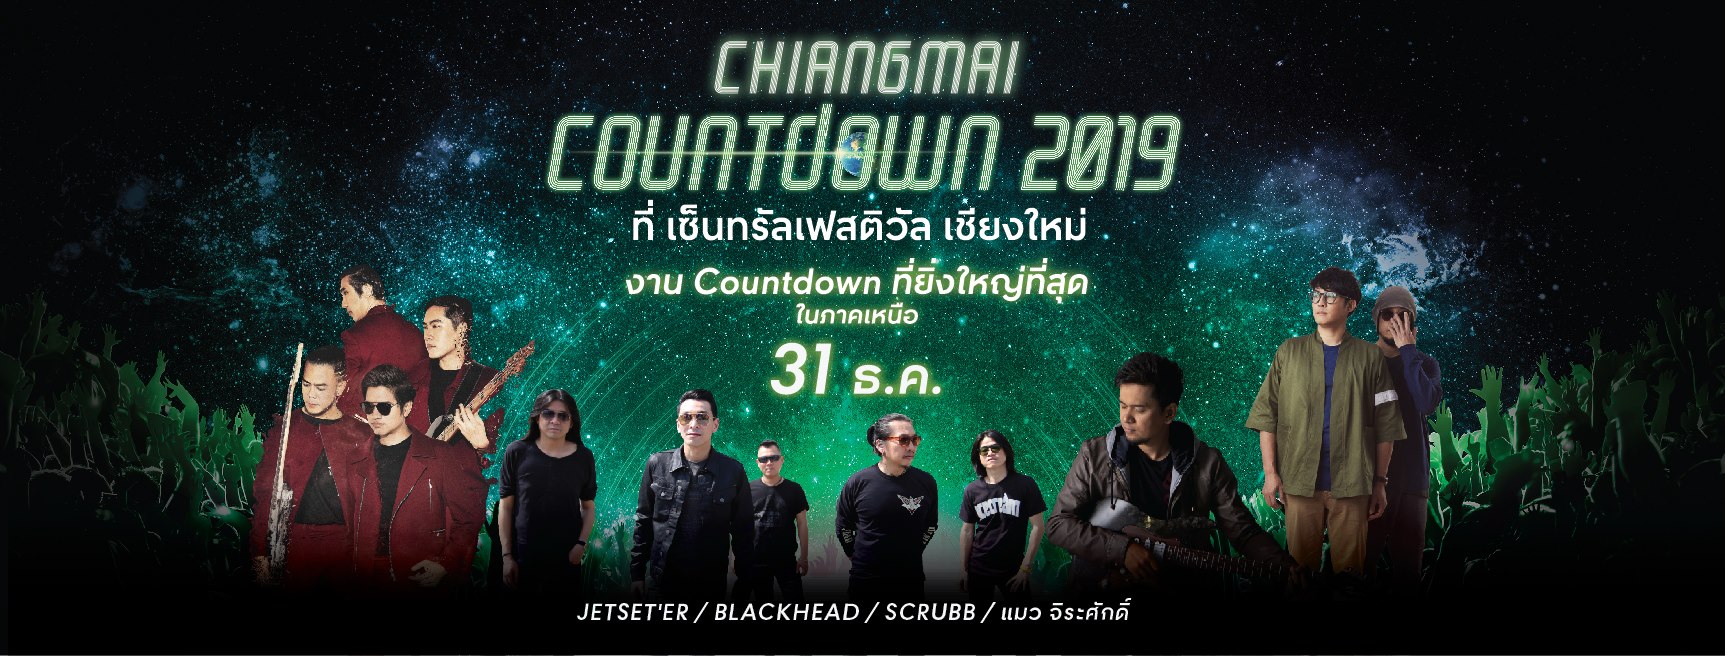 ChiangmaiCountdown2019CentralFestival